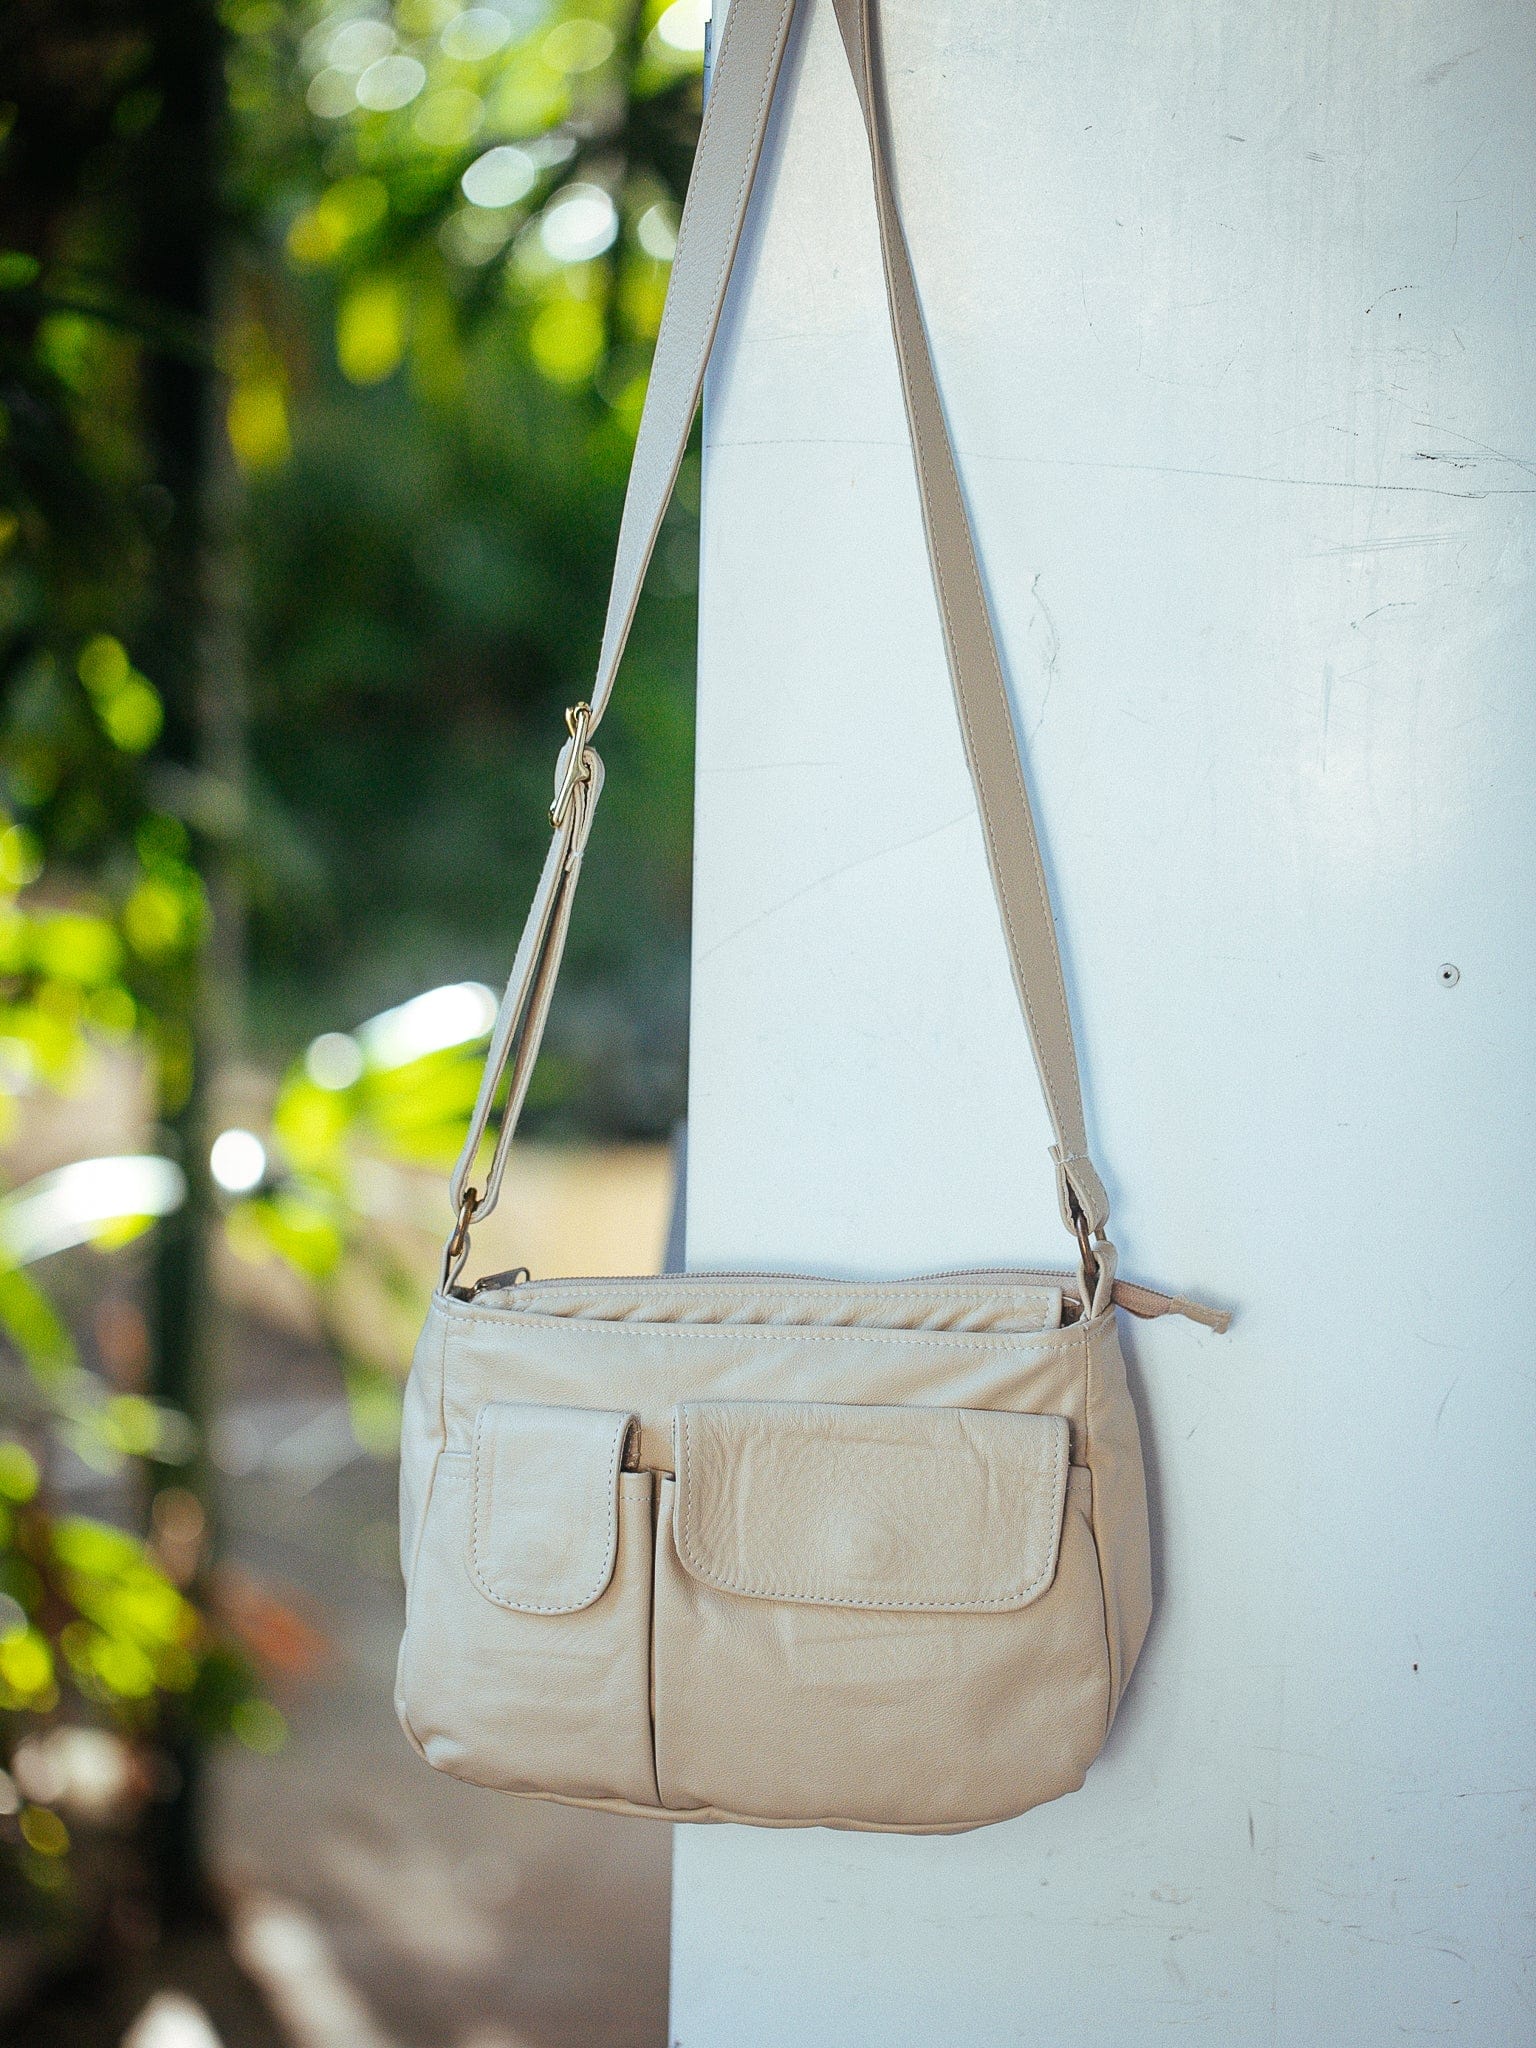 The Real McCaul Handbags Simple Annette HandBag - Small - Cowhide Australian Made Australian Owned Women's HandBags- Made in Australia Kangaroo & Cowhide Leather